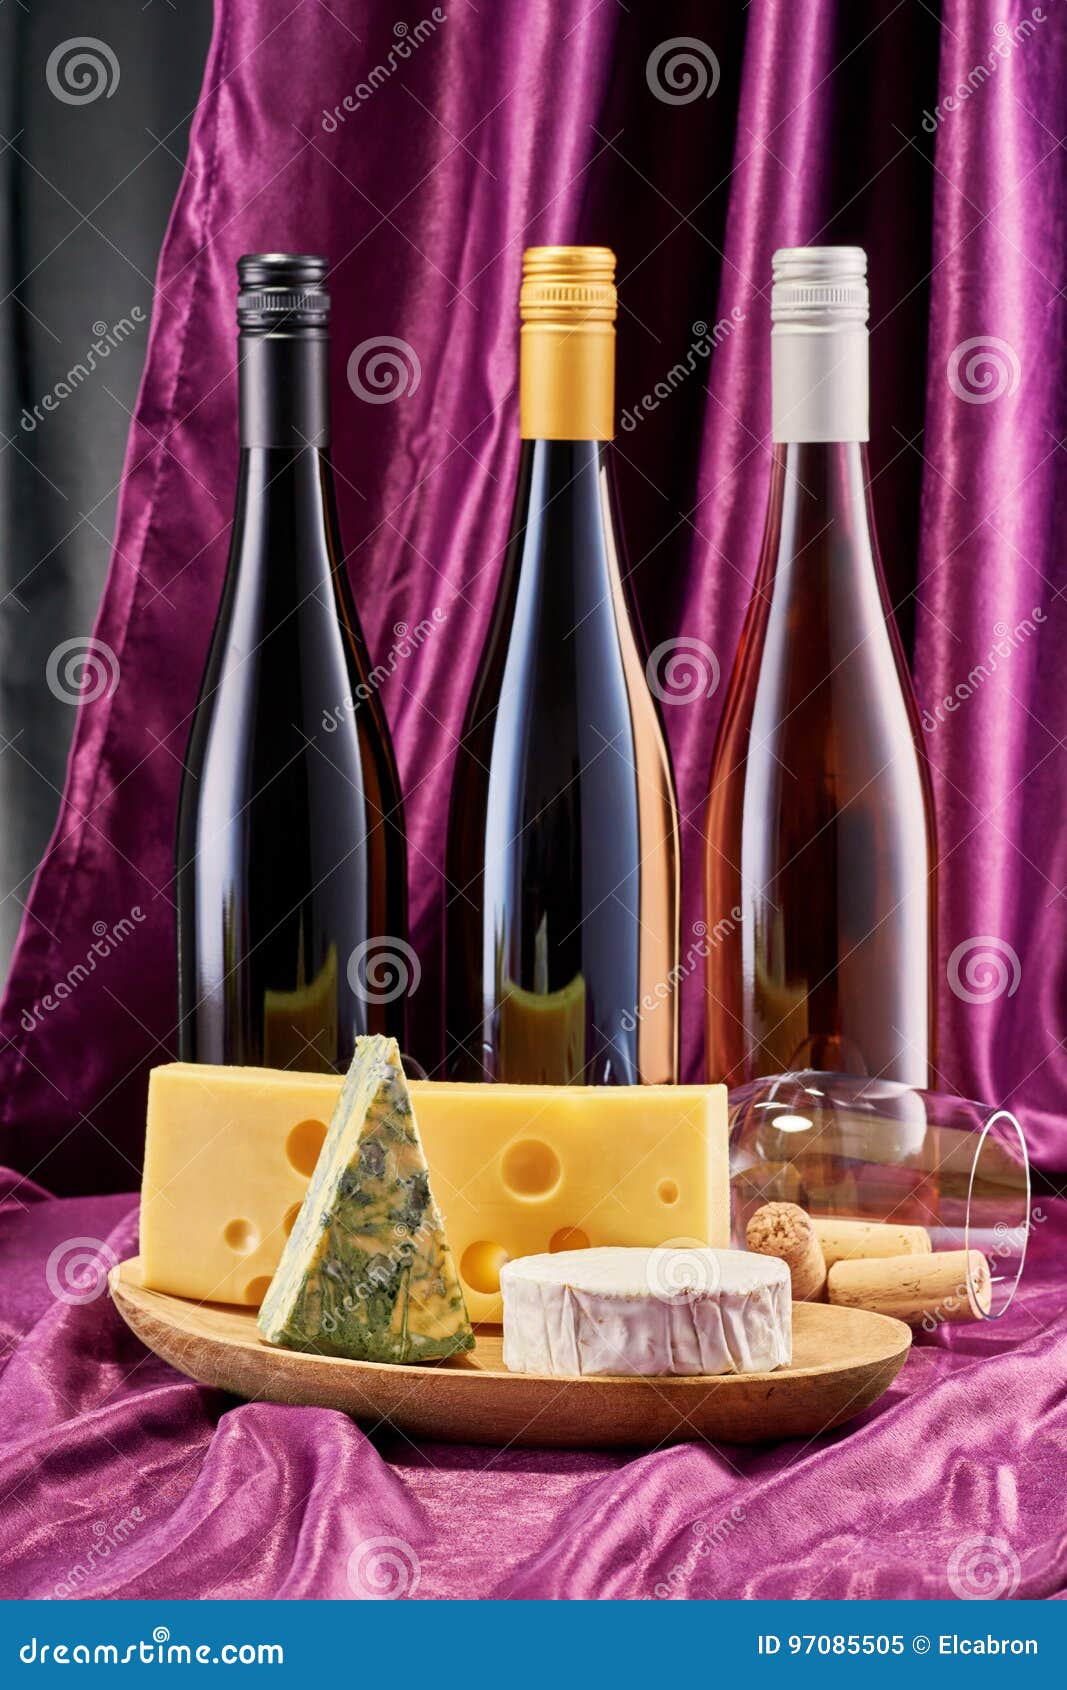 Хочу цветочки и вина. Три бутылки вина с сыром. Вино с сыром. Цветы вино сыр. Вино с сыром три бутылки.